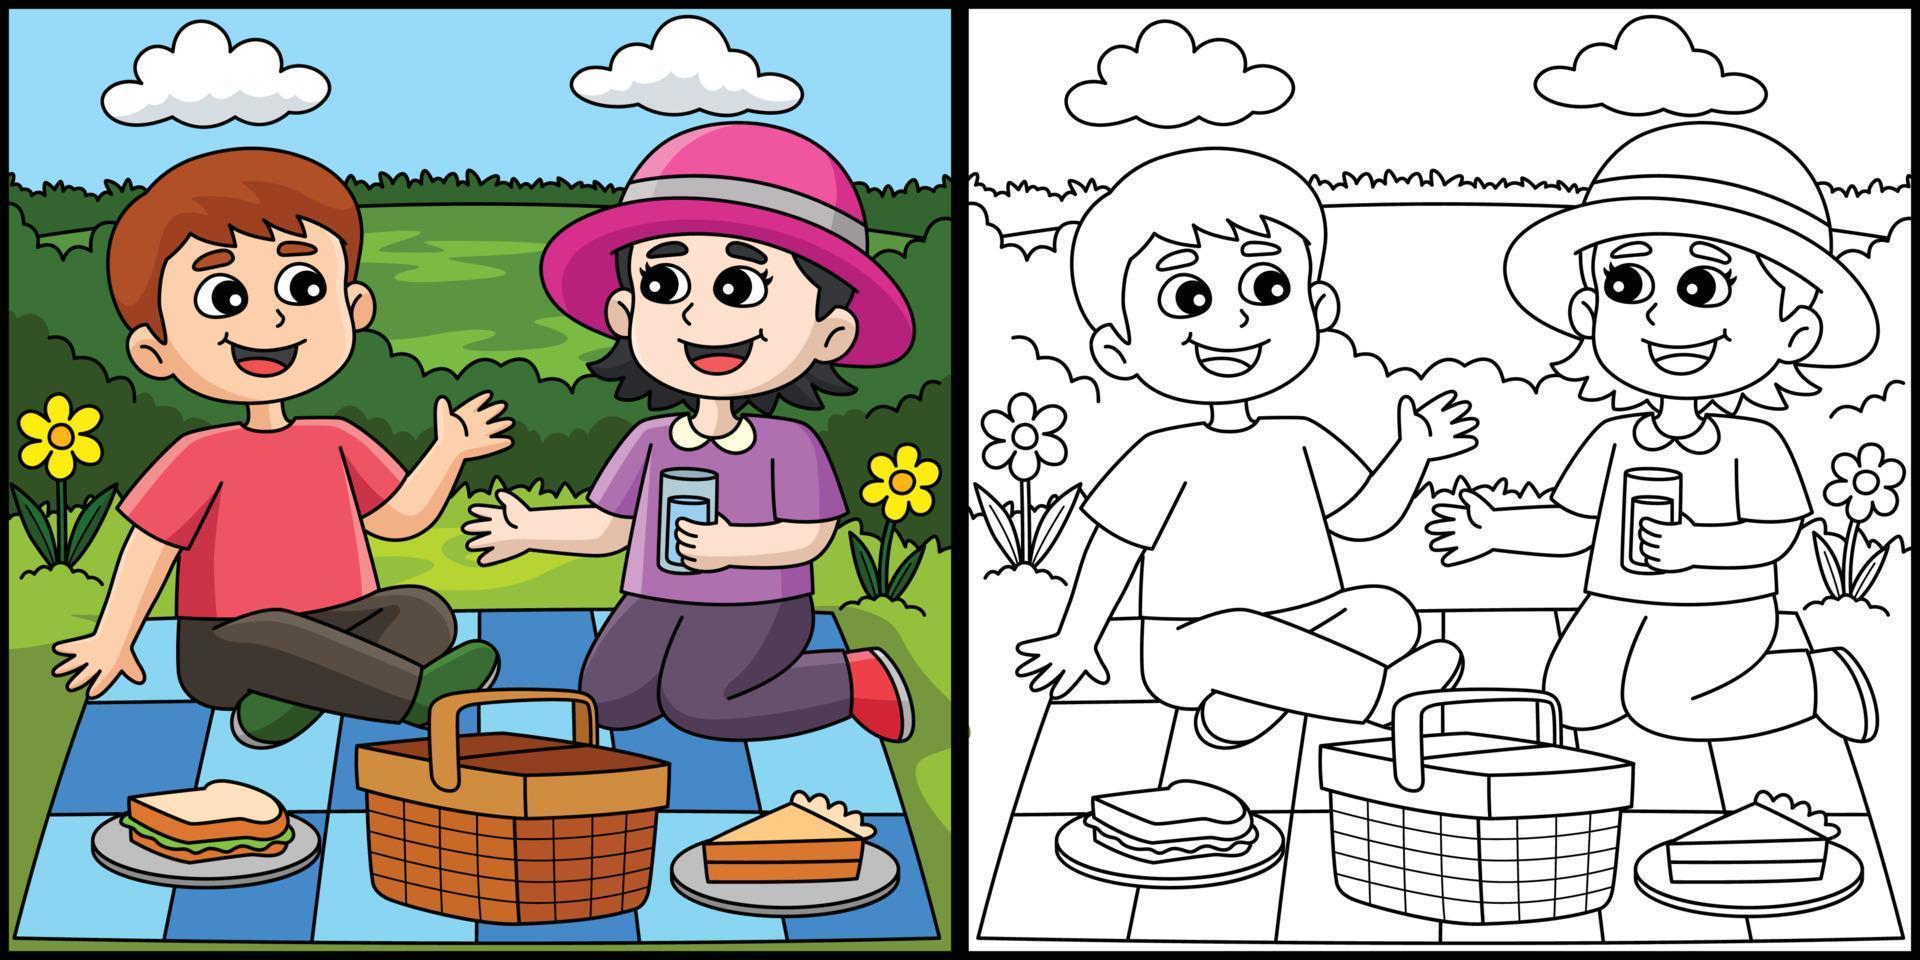 Spring Girl and Boy Having a Picnic Illustration vector